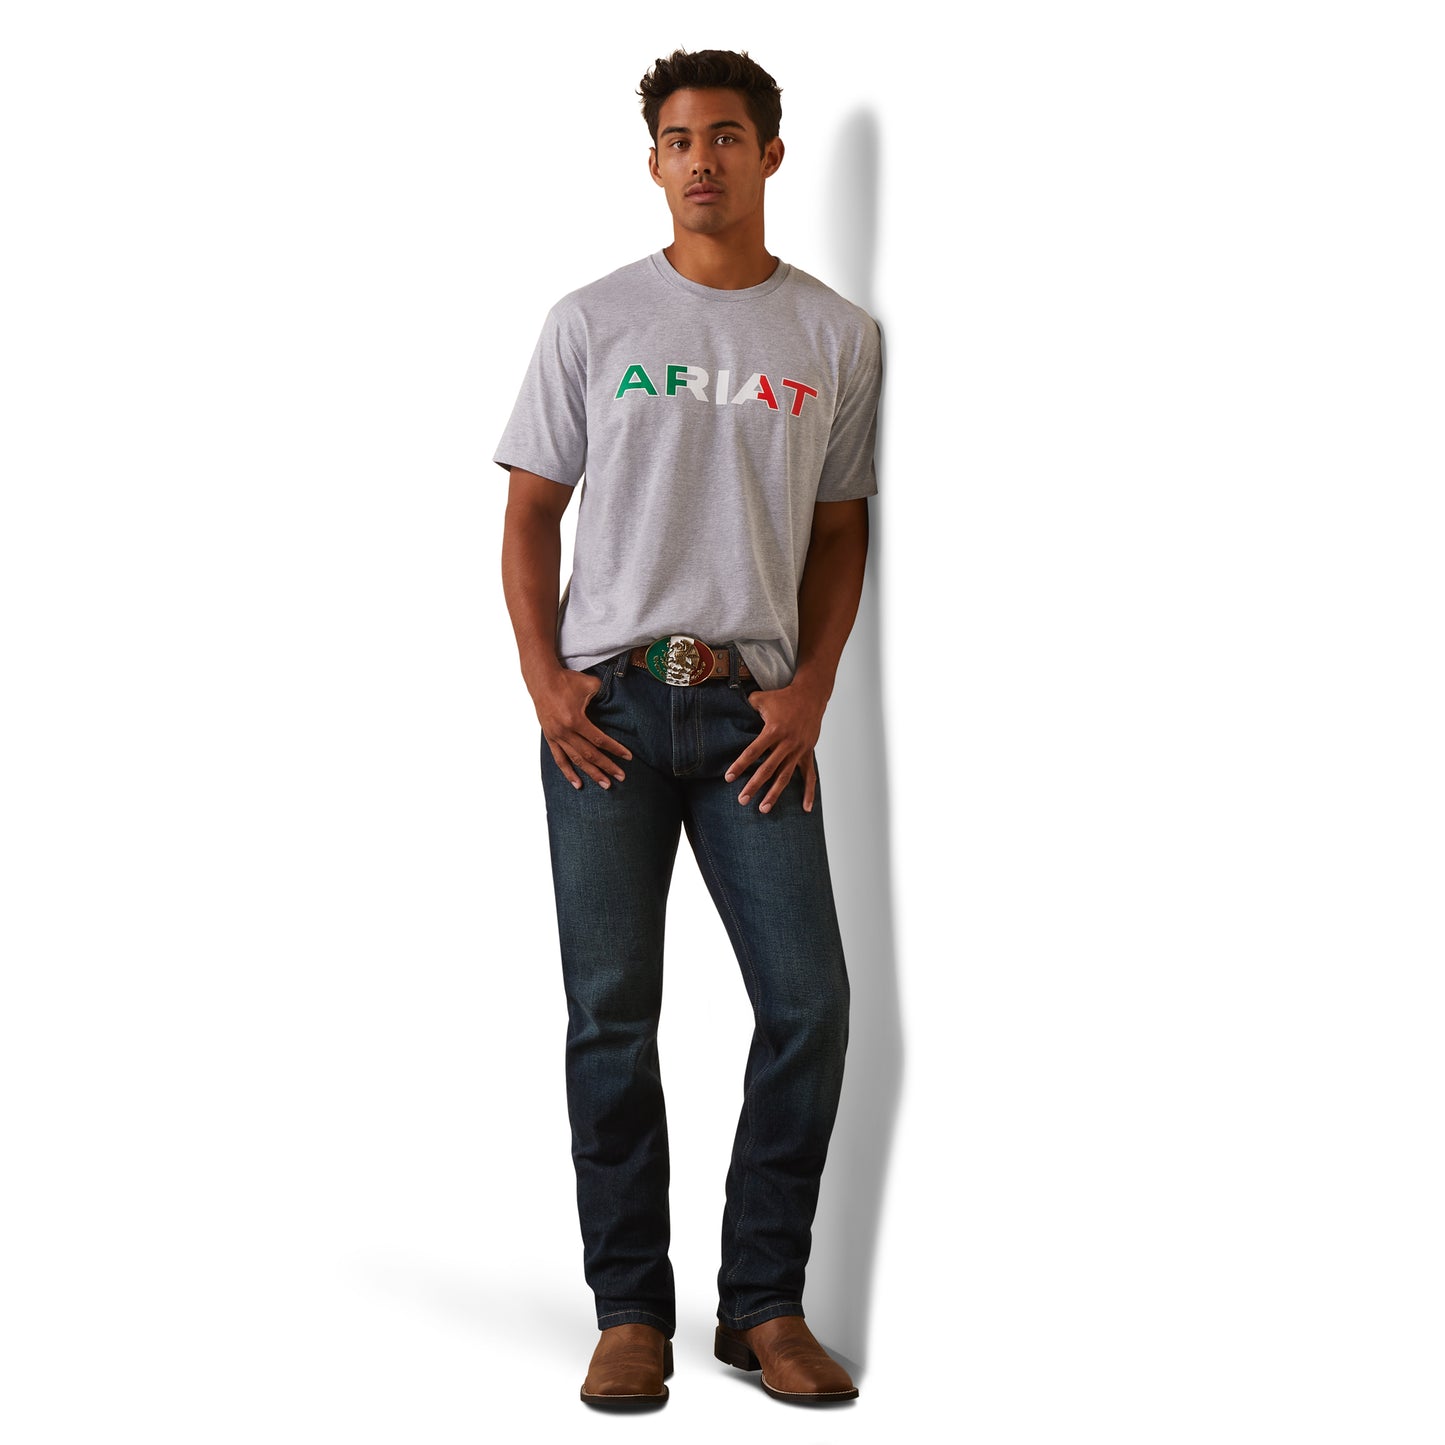 Ariat® Men's Viva Mexico Independent SMU Heather Grey T-Shirt 10043100